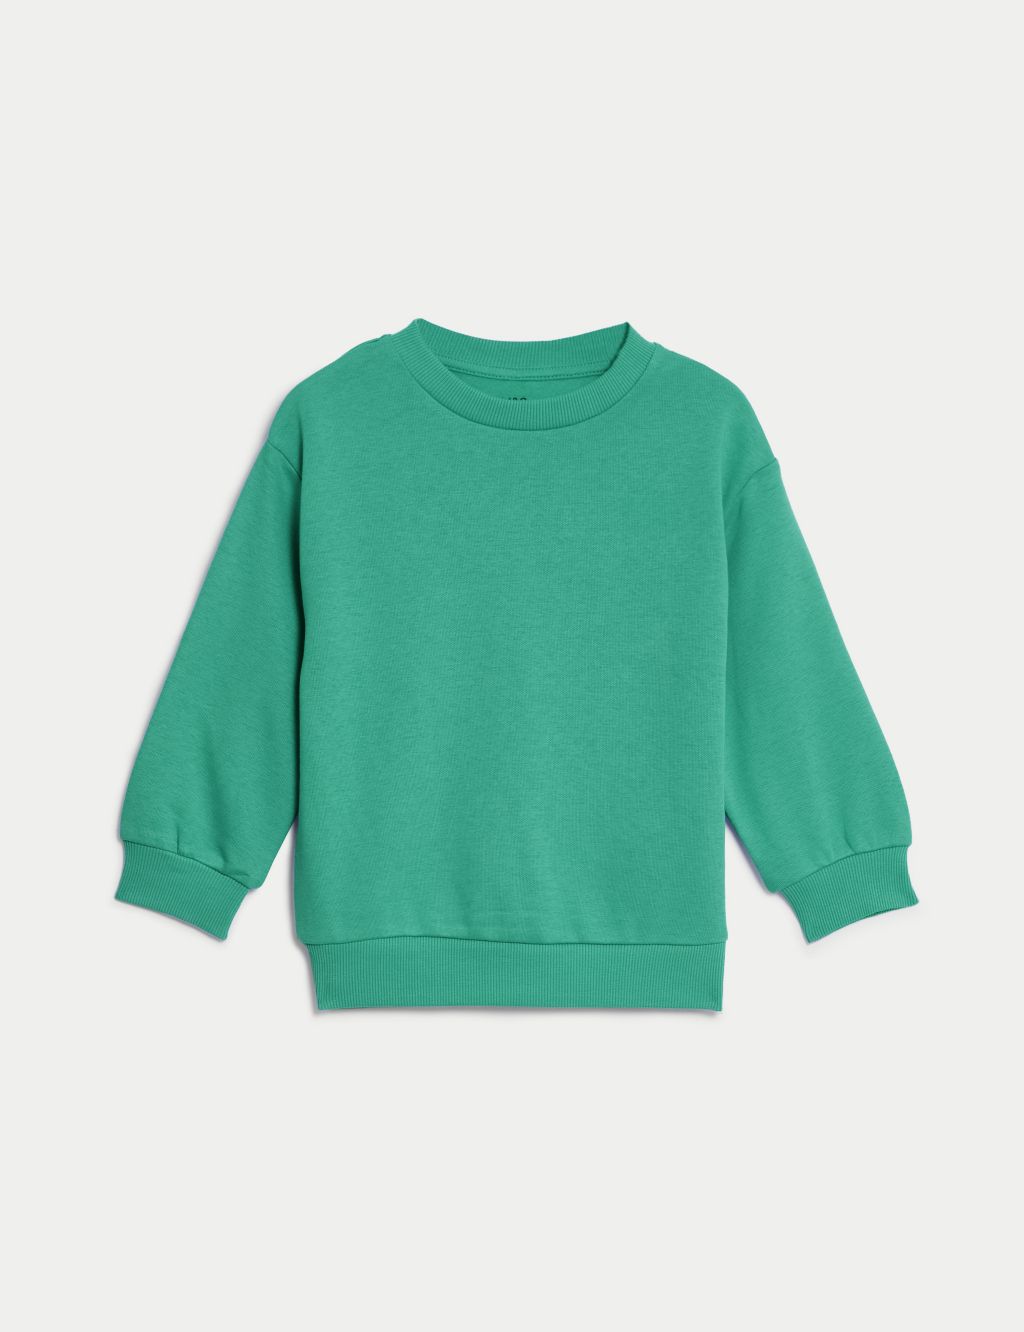 Cotton Rich Plain Sweatshirt (2-8 Yrs)